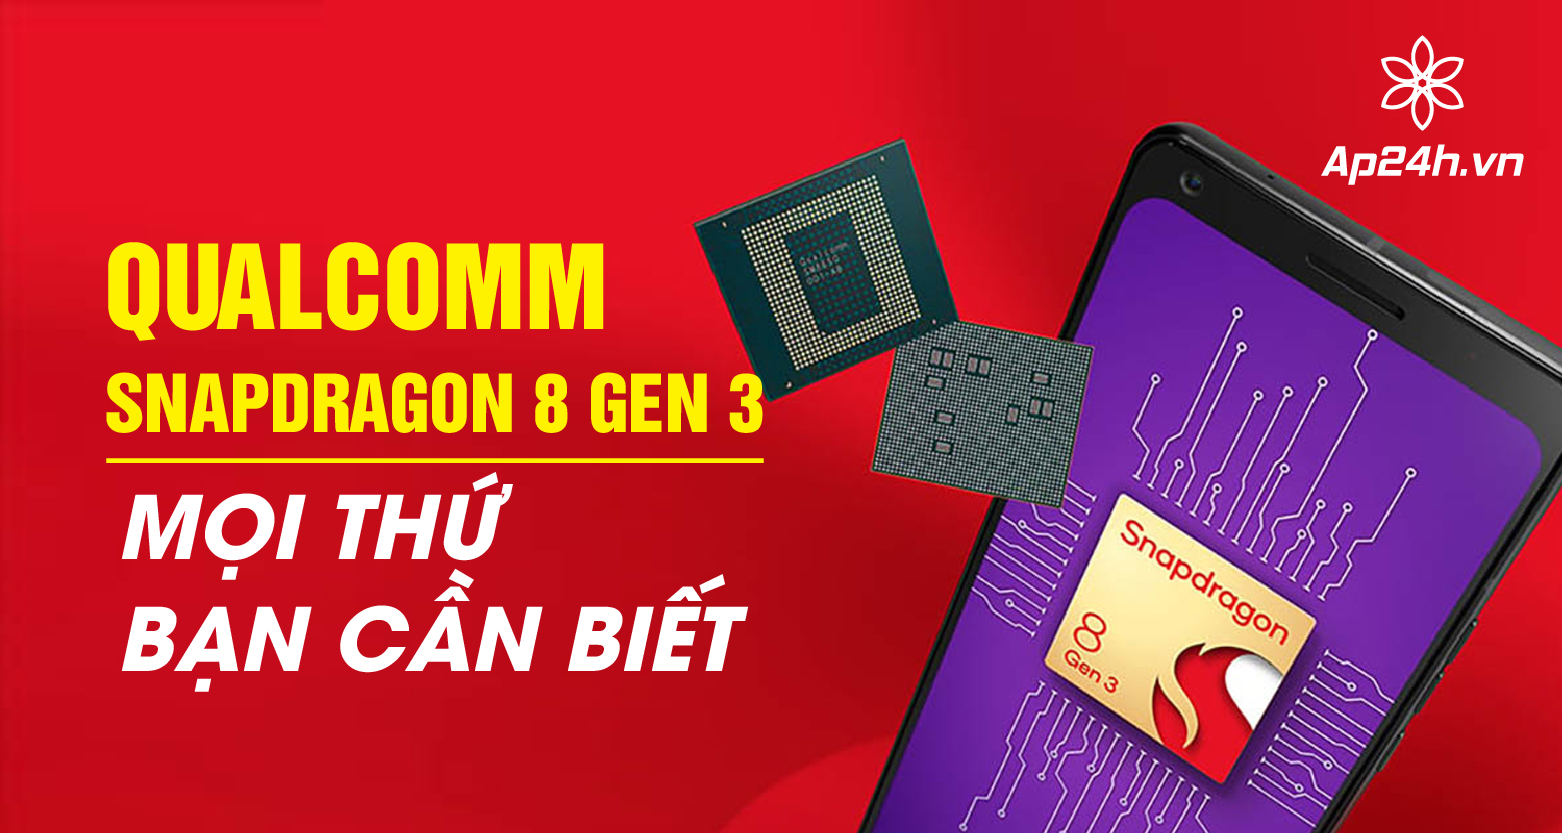  Qualcomm Snapdragon 8 Gen 3